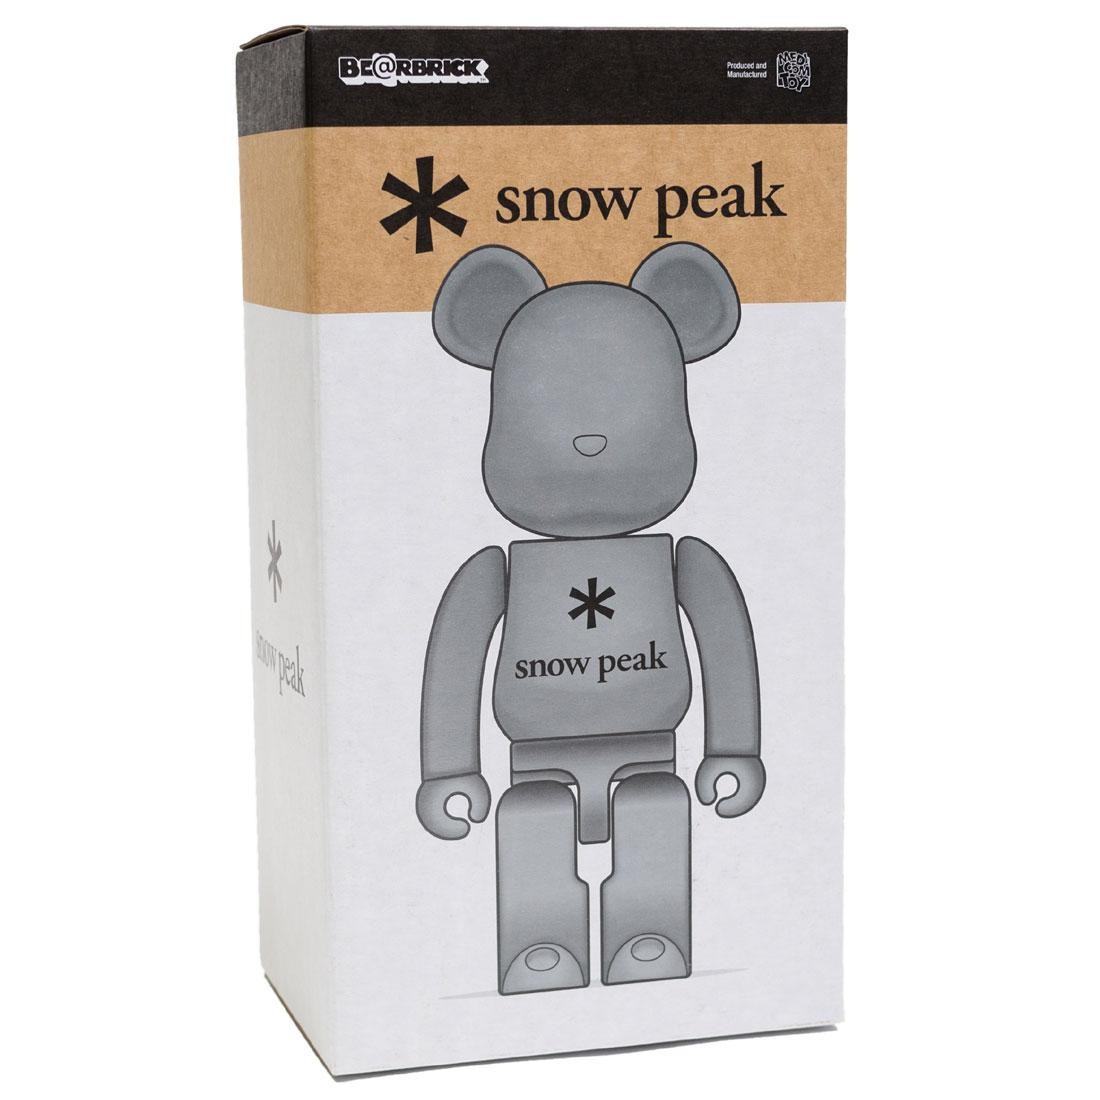 Medicom Snow Peak 400% Bearbrick Figure silver